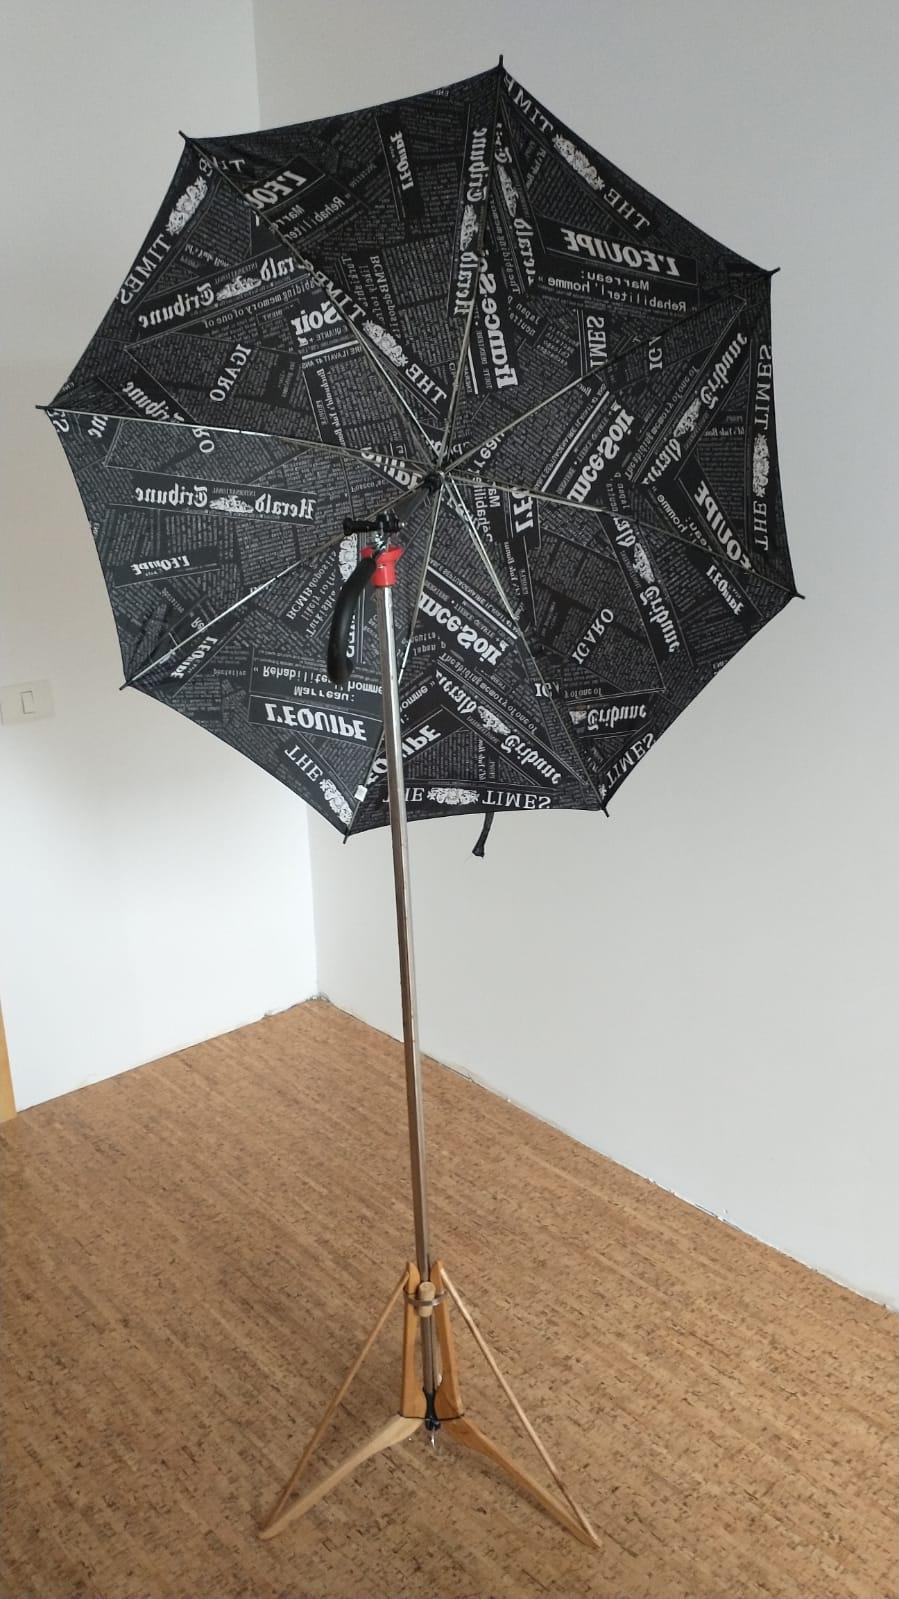 DIY-AdHoc-Tripod-fromBroomHandle&amp;ClothesHangers-Umbrella&amp;Flash-Ready-2.jpeg